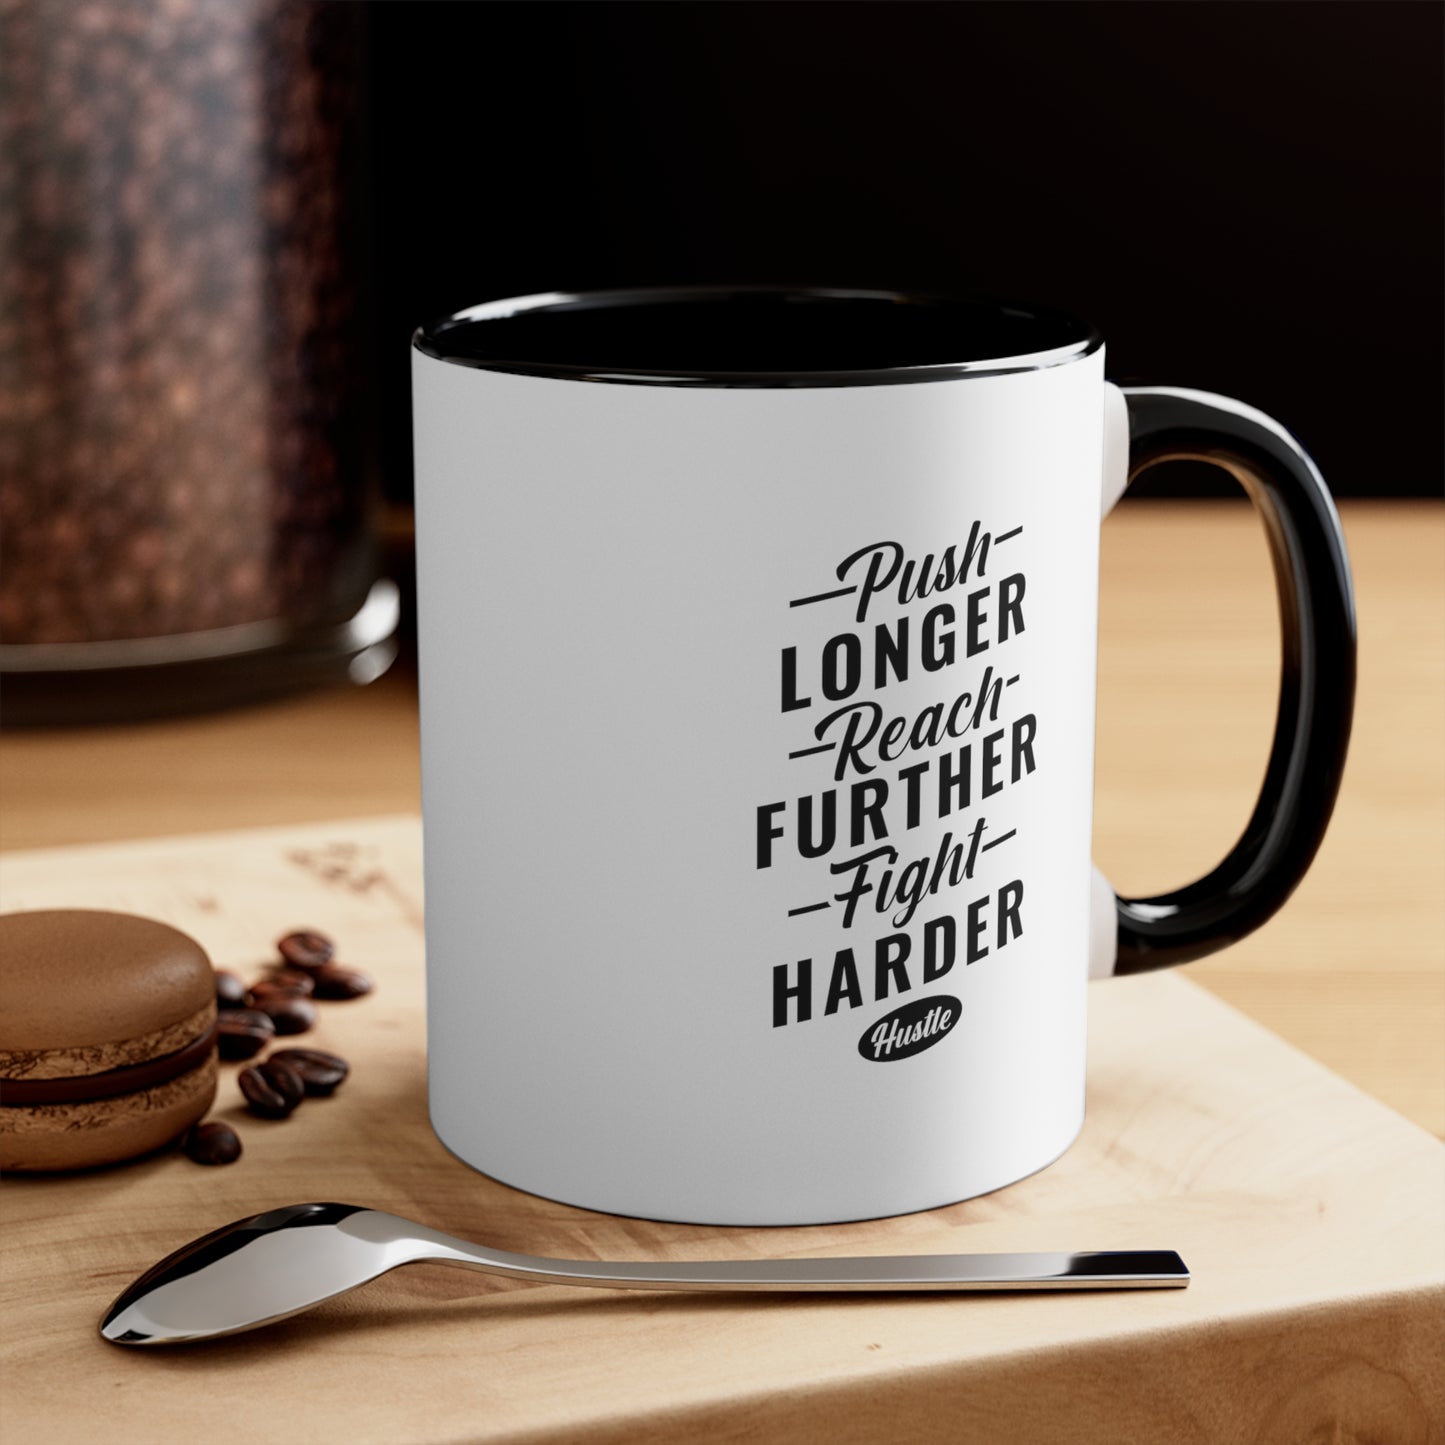 Push Harder Motivational Accent Coffee Mug, 11oz Mulitple Accent Colors